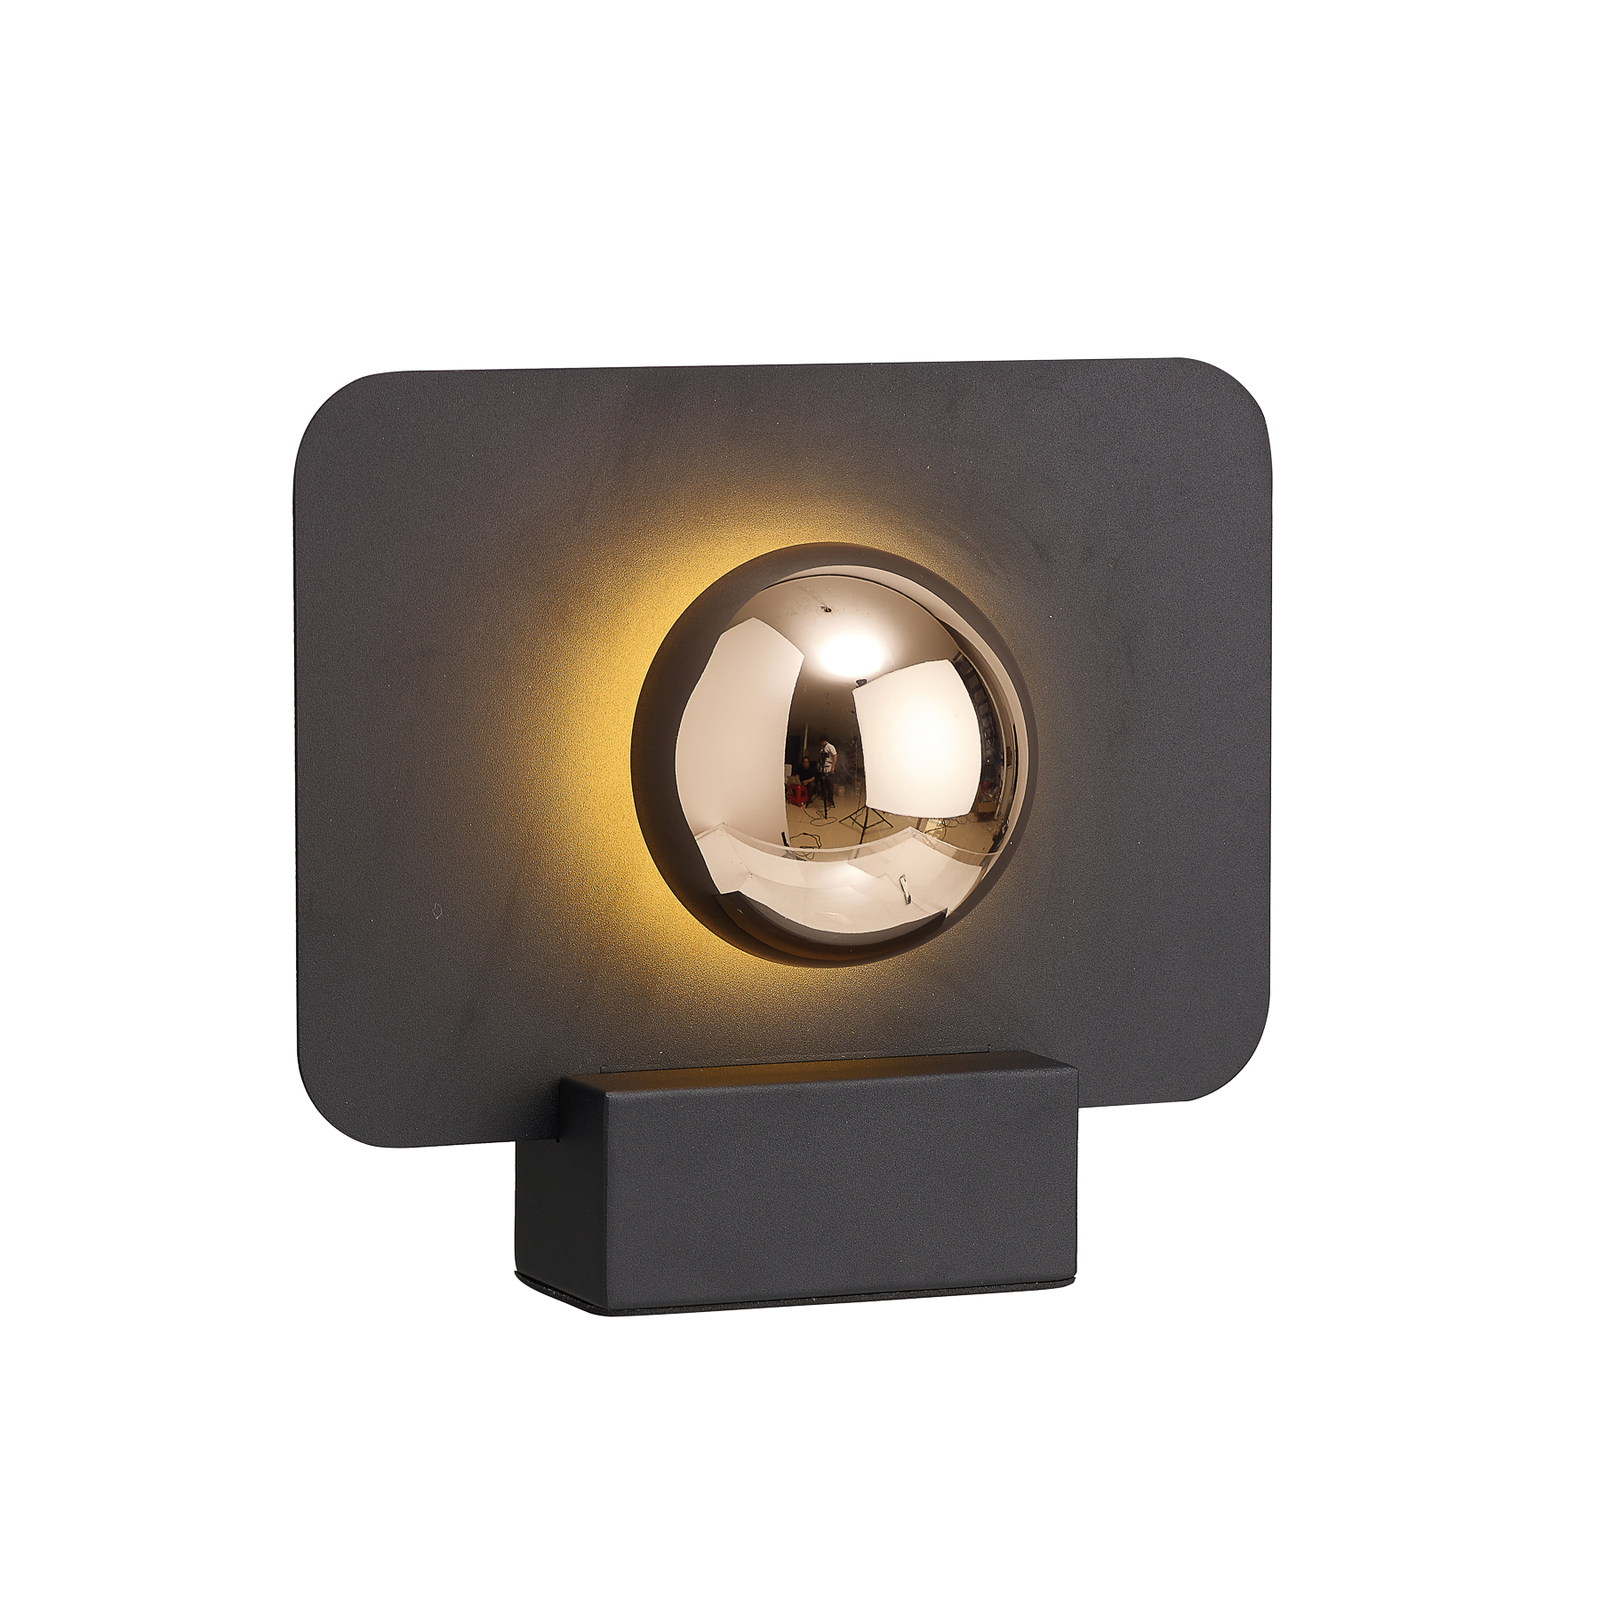 Alba LED tafellamp, indirect verlichtingseffect, zwart